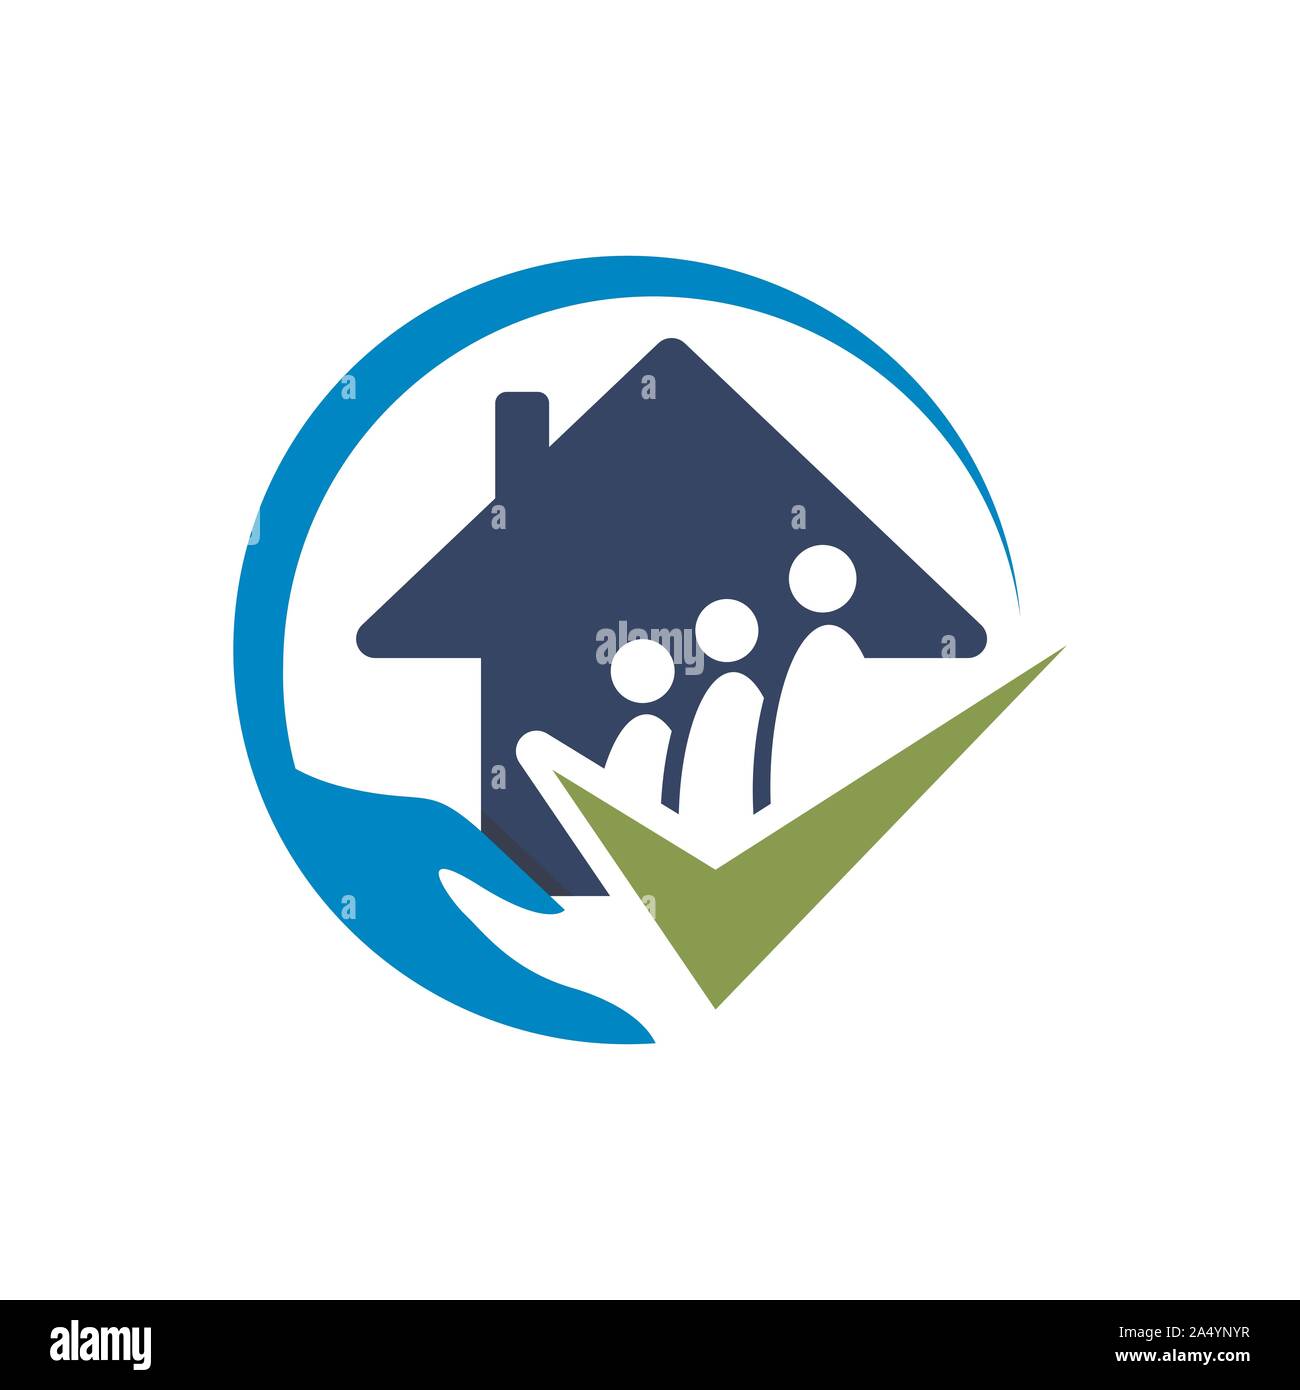 nursing home logo design home care elderly vector illustrations Stock Vector